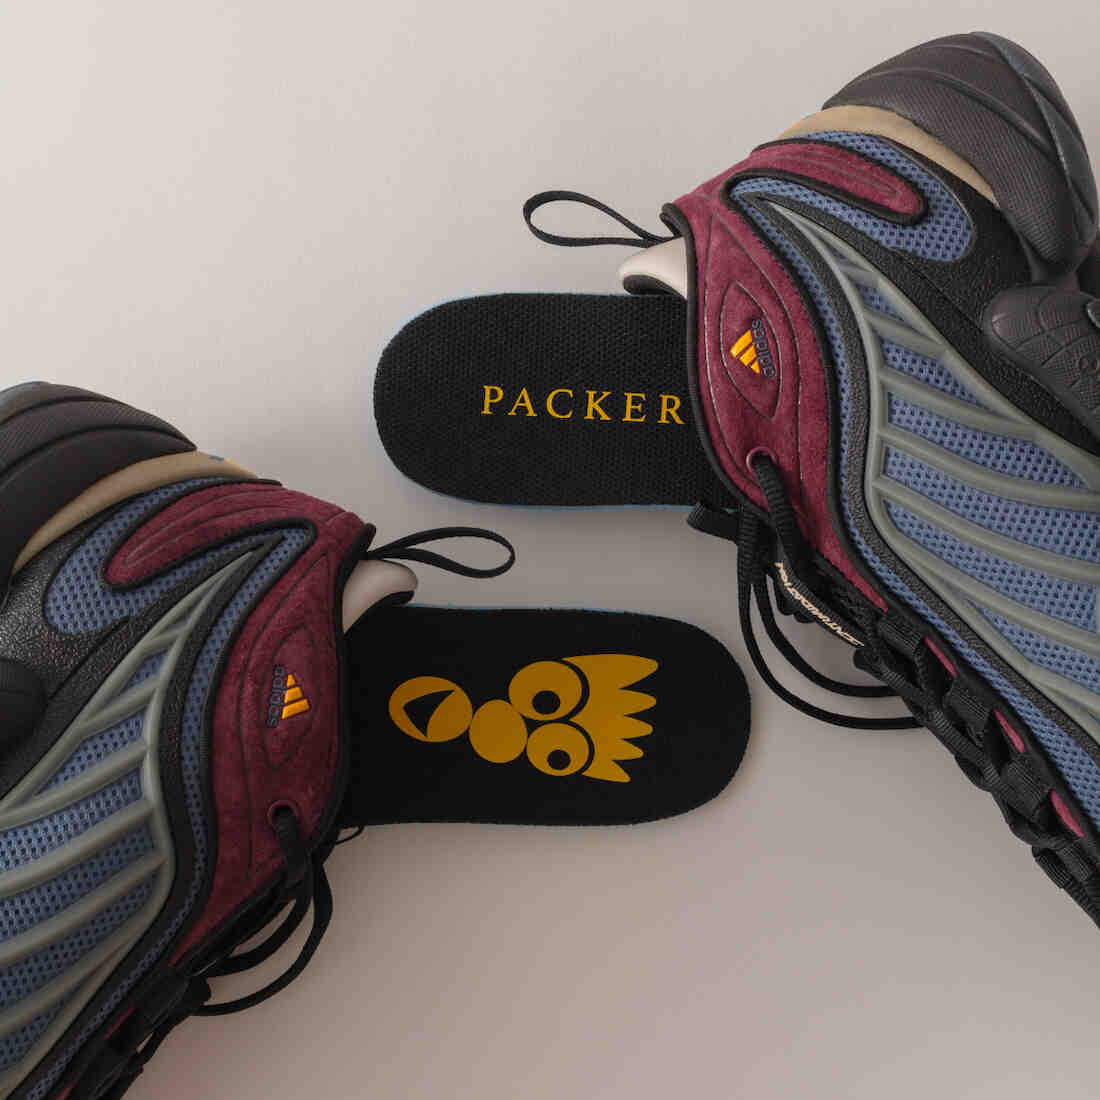 阿迪达斯, 运动鞋, Packer Shoes, Adidas